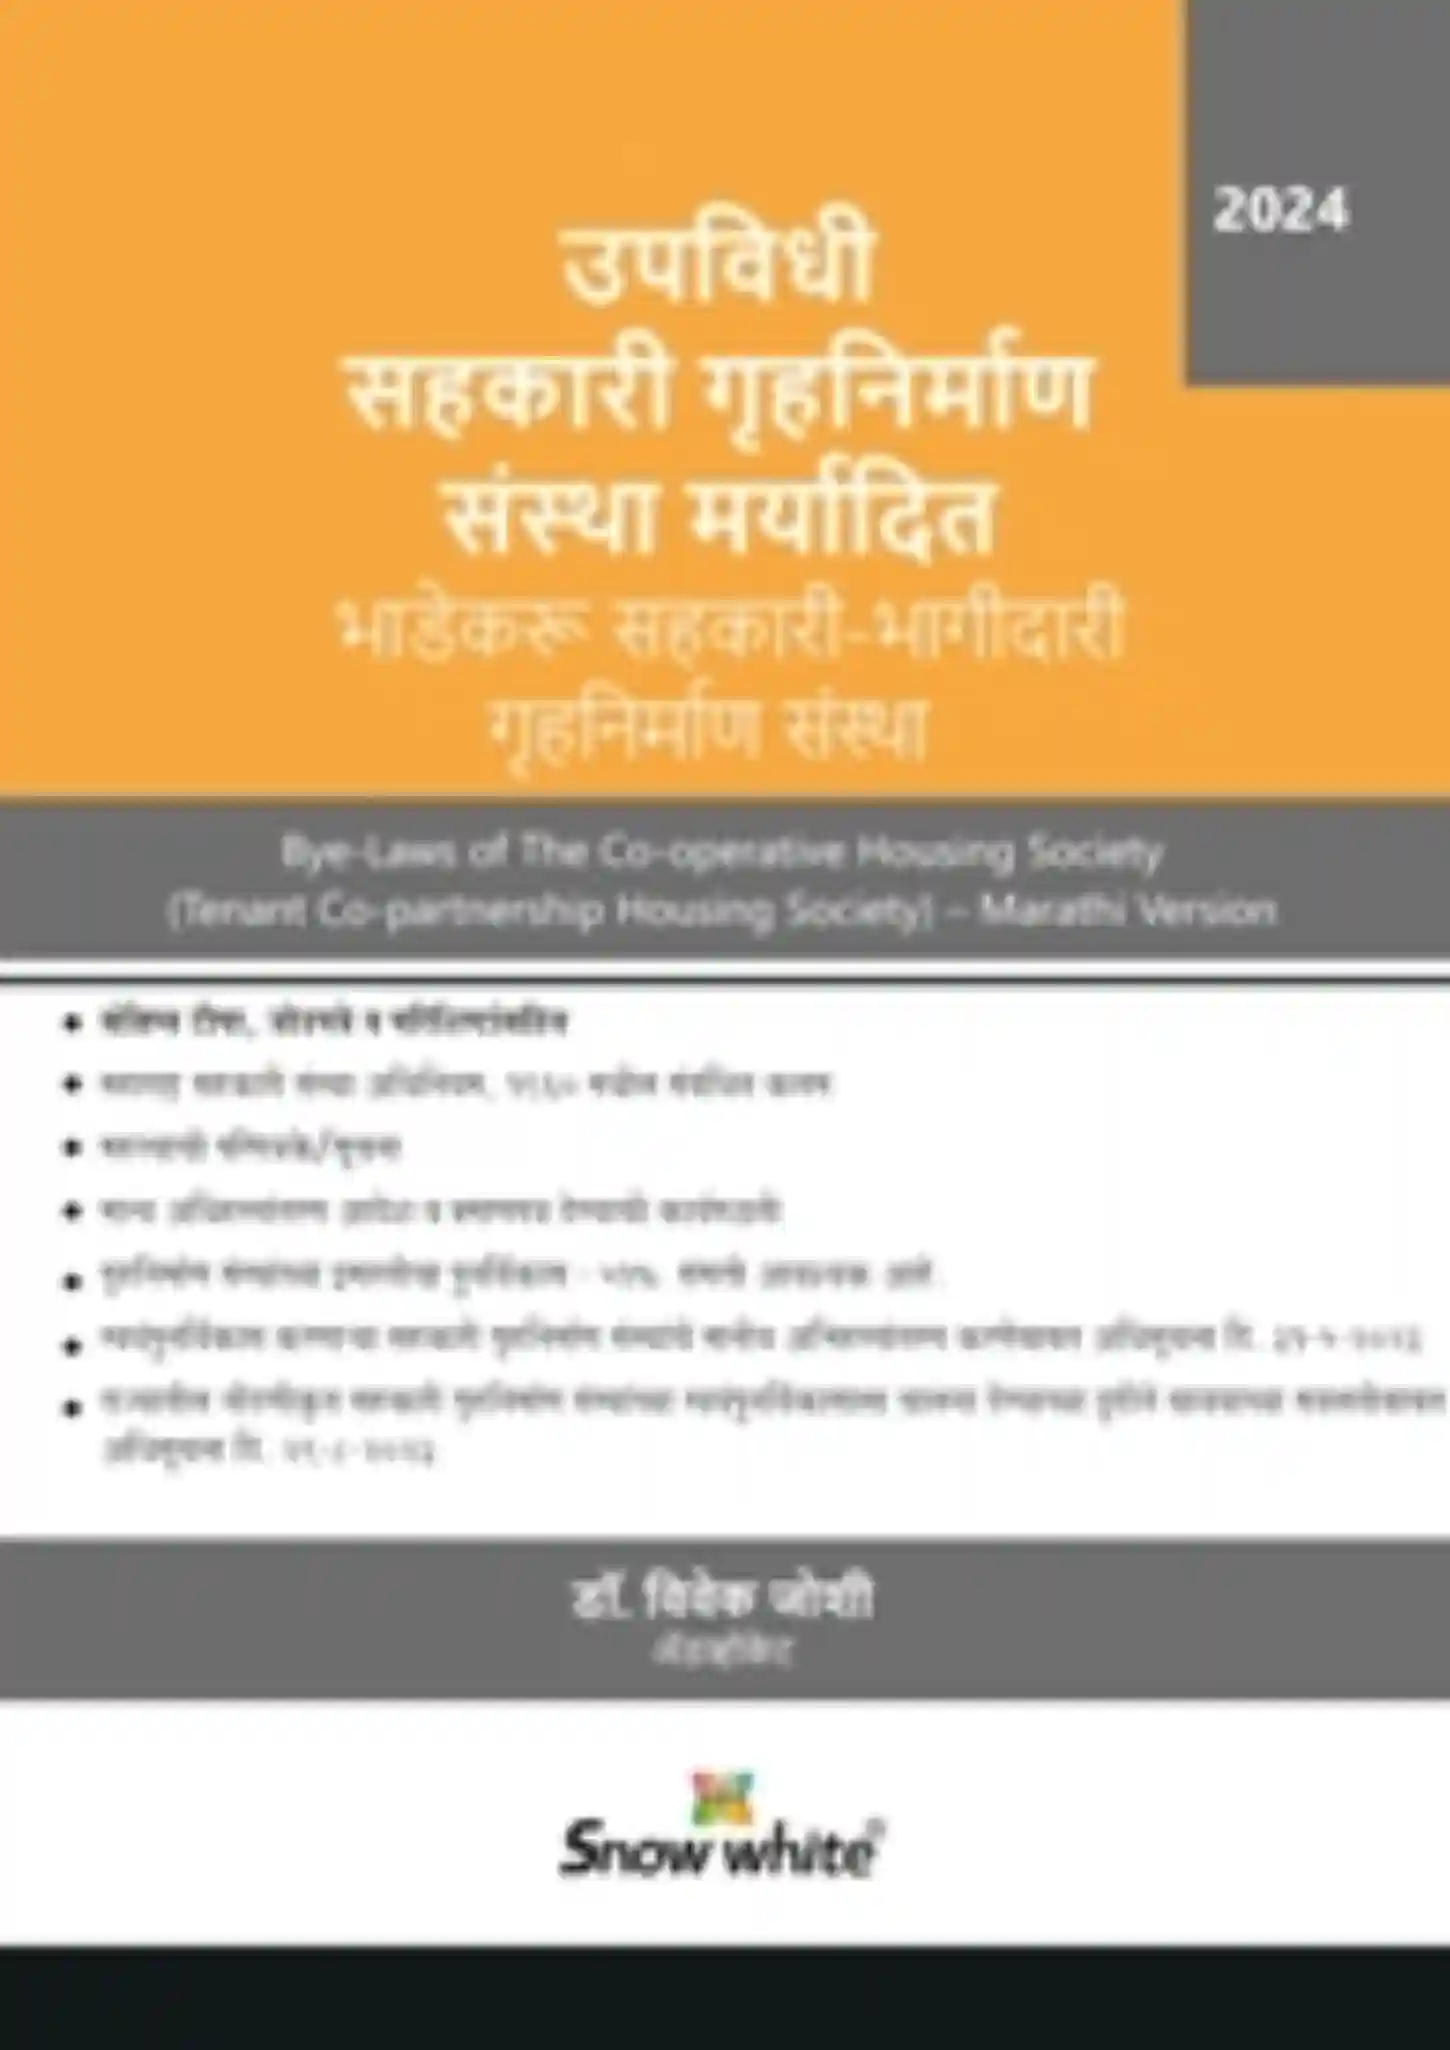 Bye- Laws Of The Co-Operative Housing Society ( Tenant Co-Partnership Housing Society) - Marathi Version